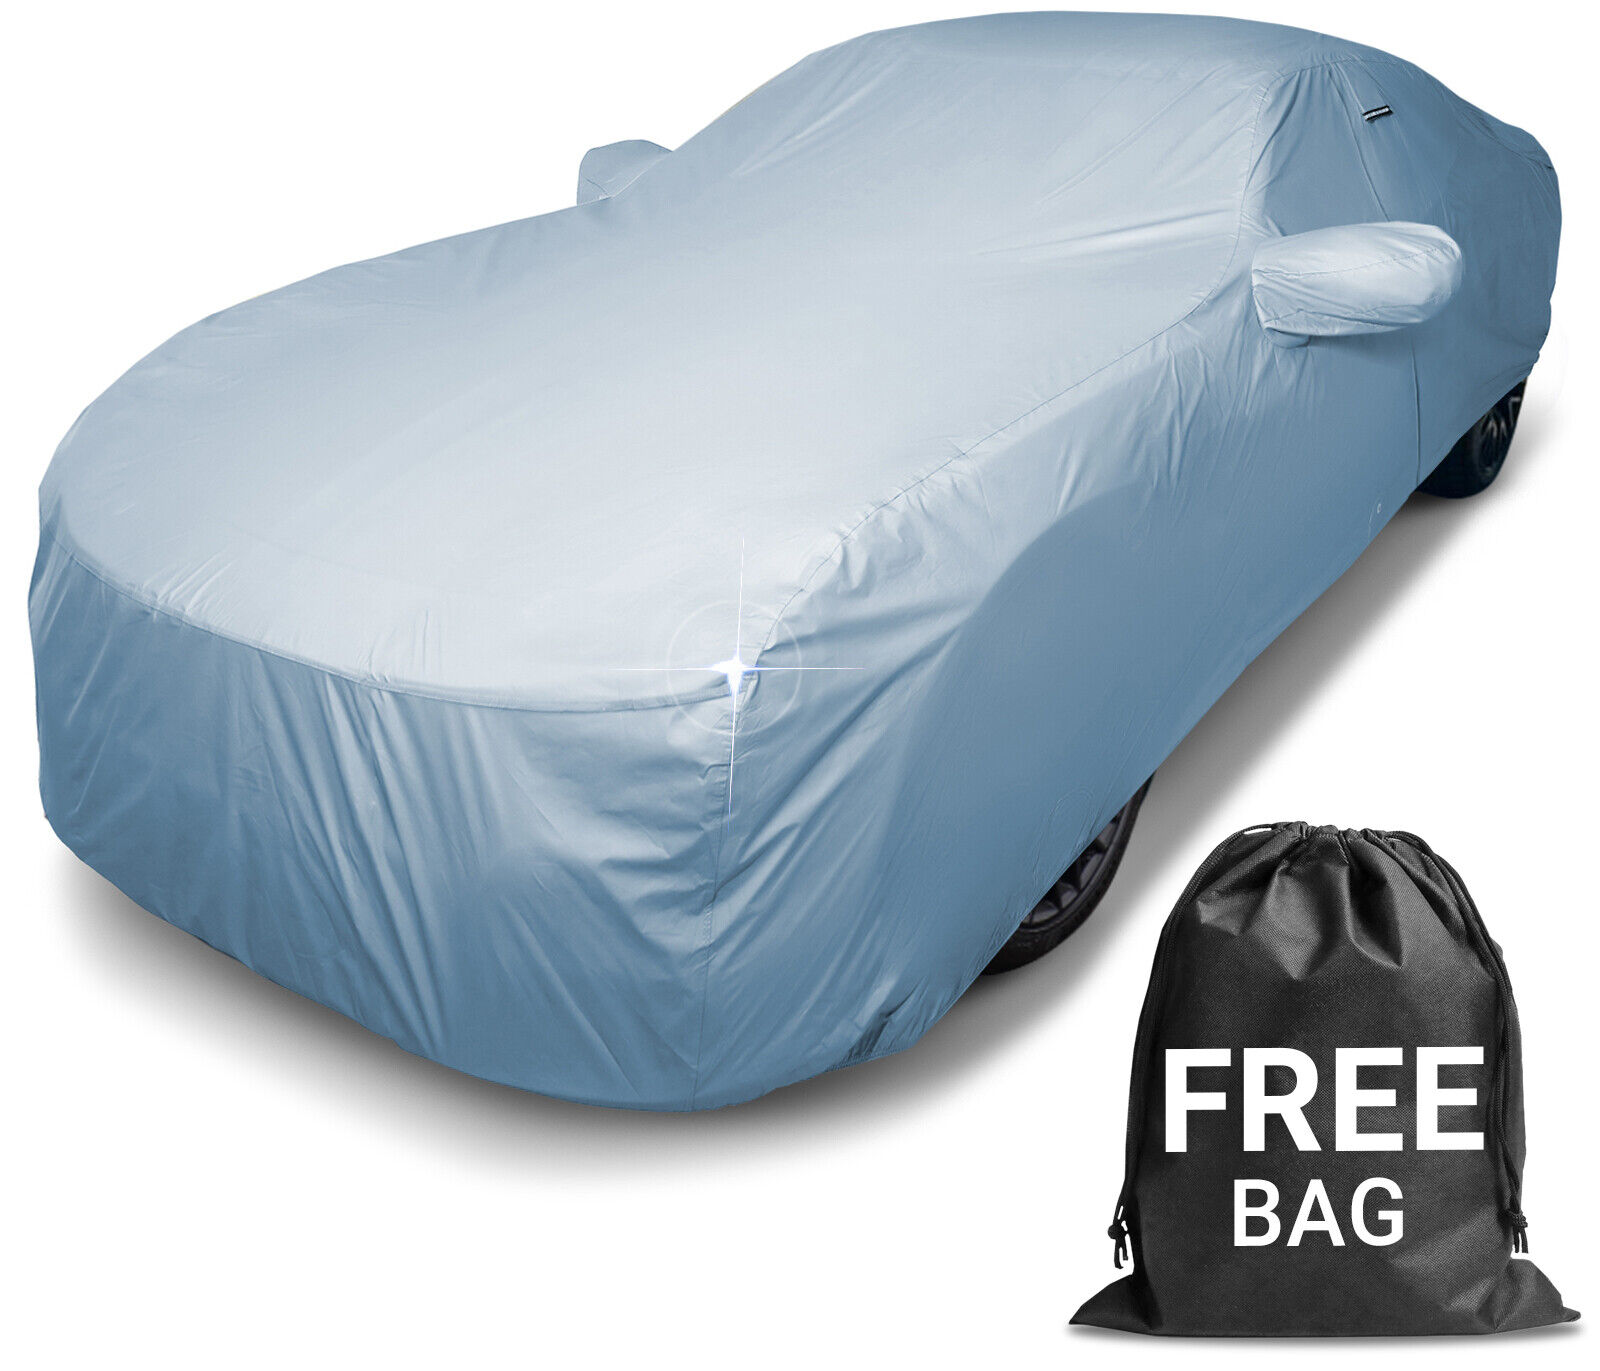 MAZDA [MAZDASPEED3] Premium Custom-Fit Outdoor Waterproof Car Cover